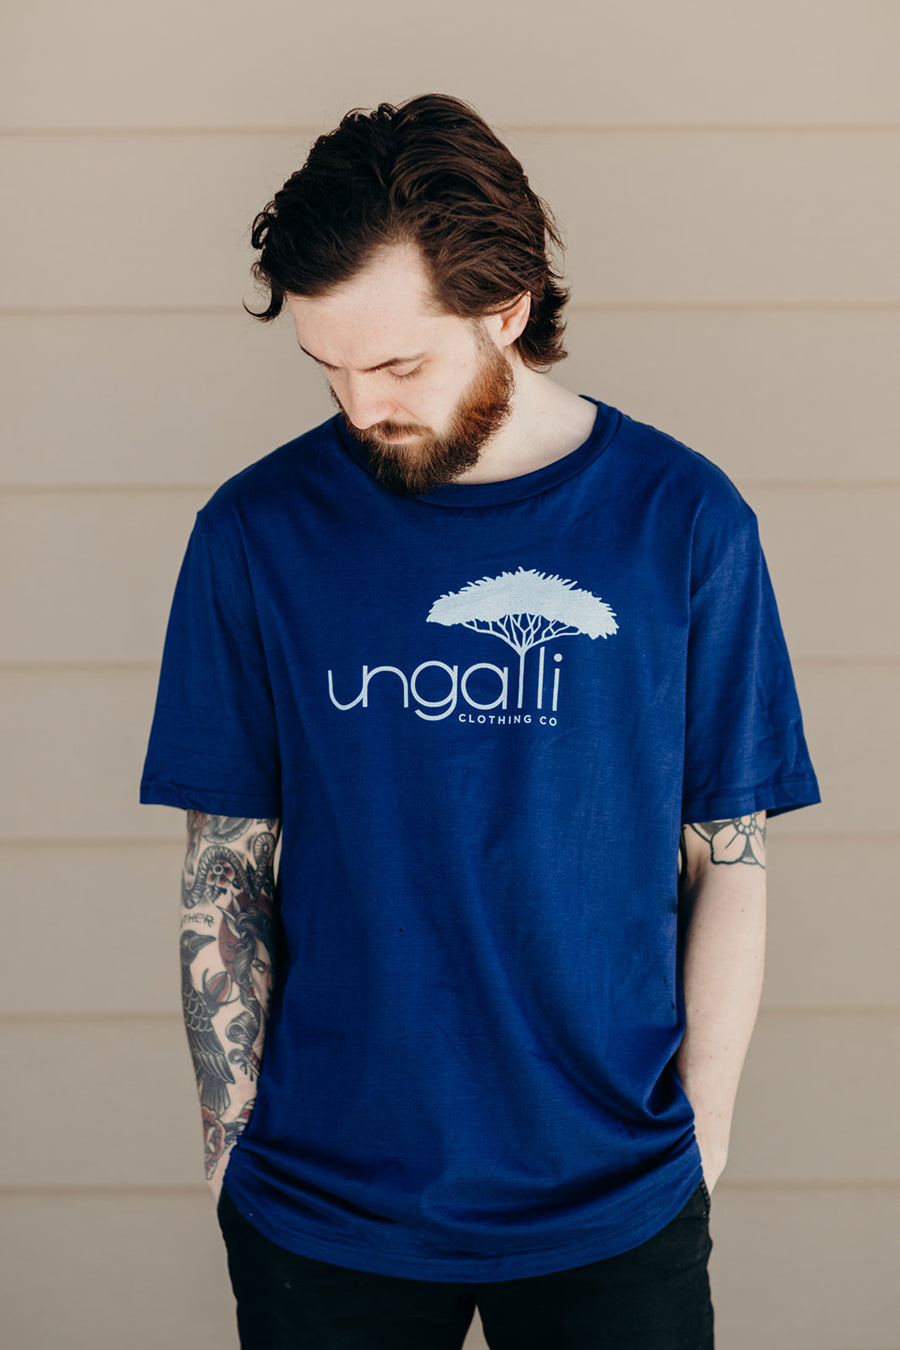 Unisex blue organic t-shirt with Ungalli logo across front